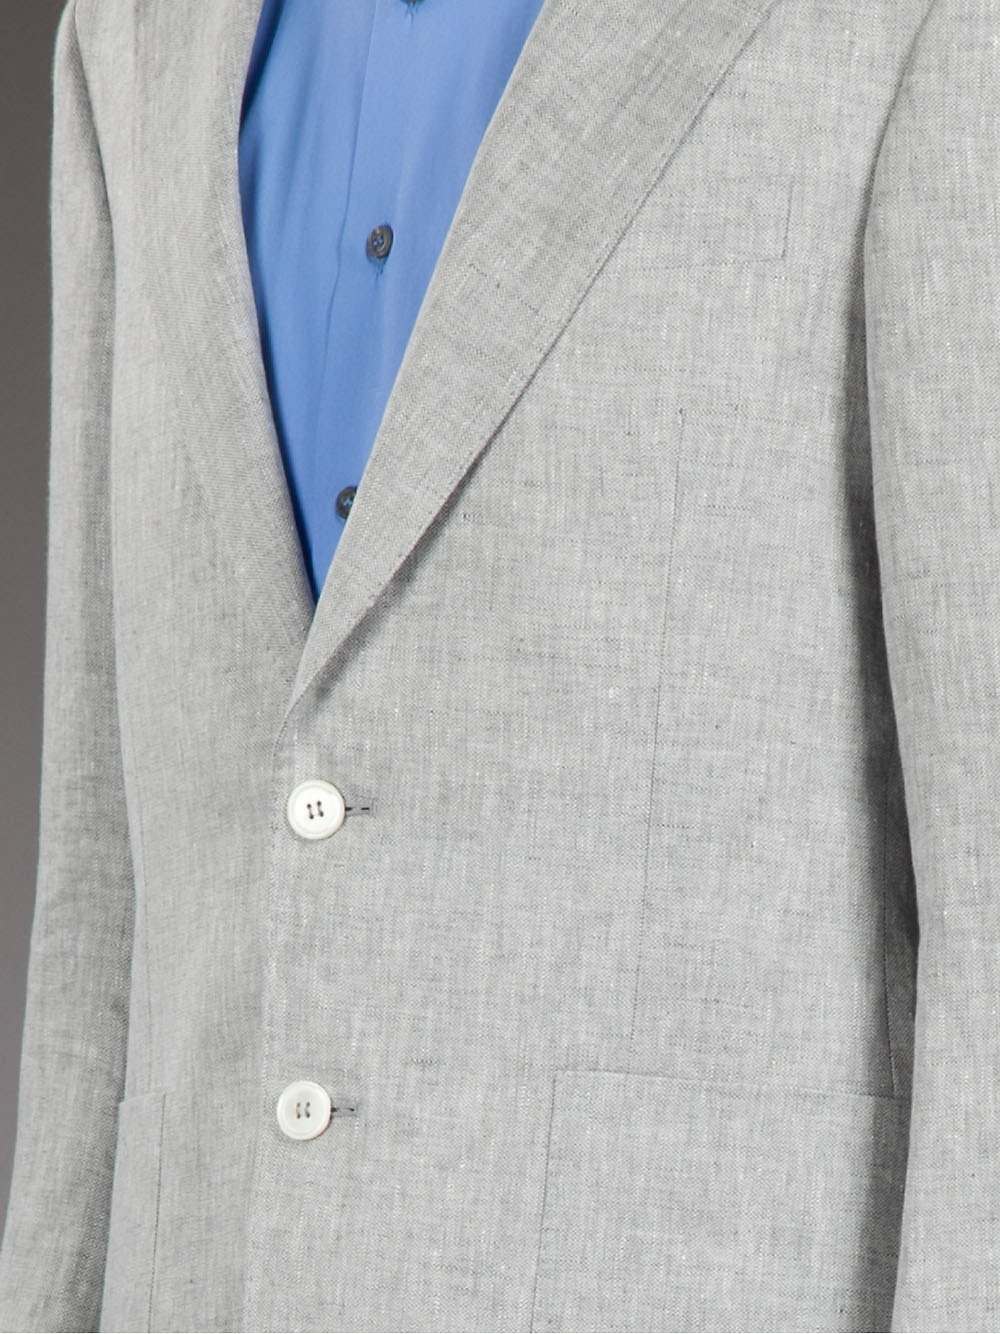 Paul Smith Top Stitch Linen Blazer in Grey (Gray) for Men - Lyst